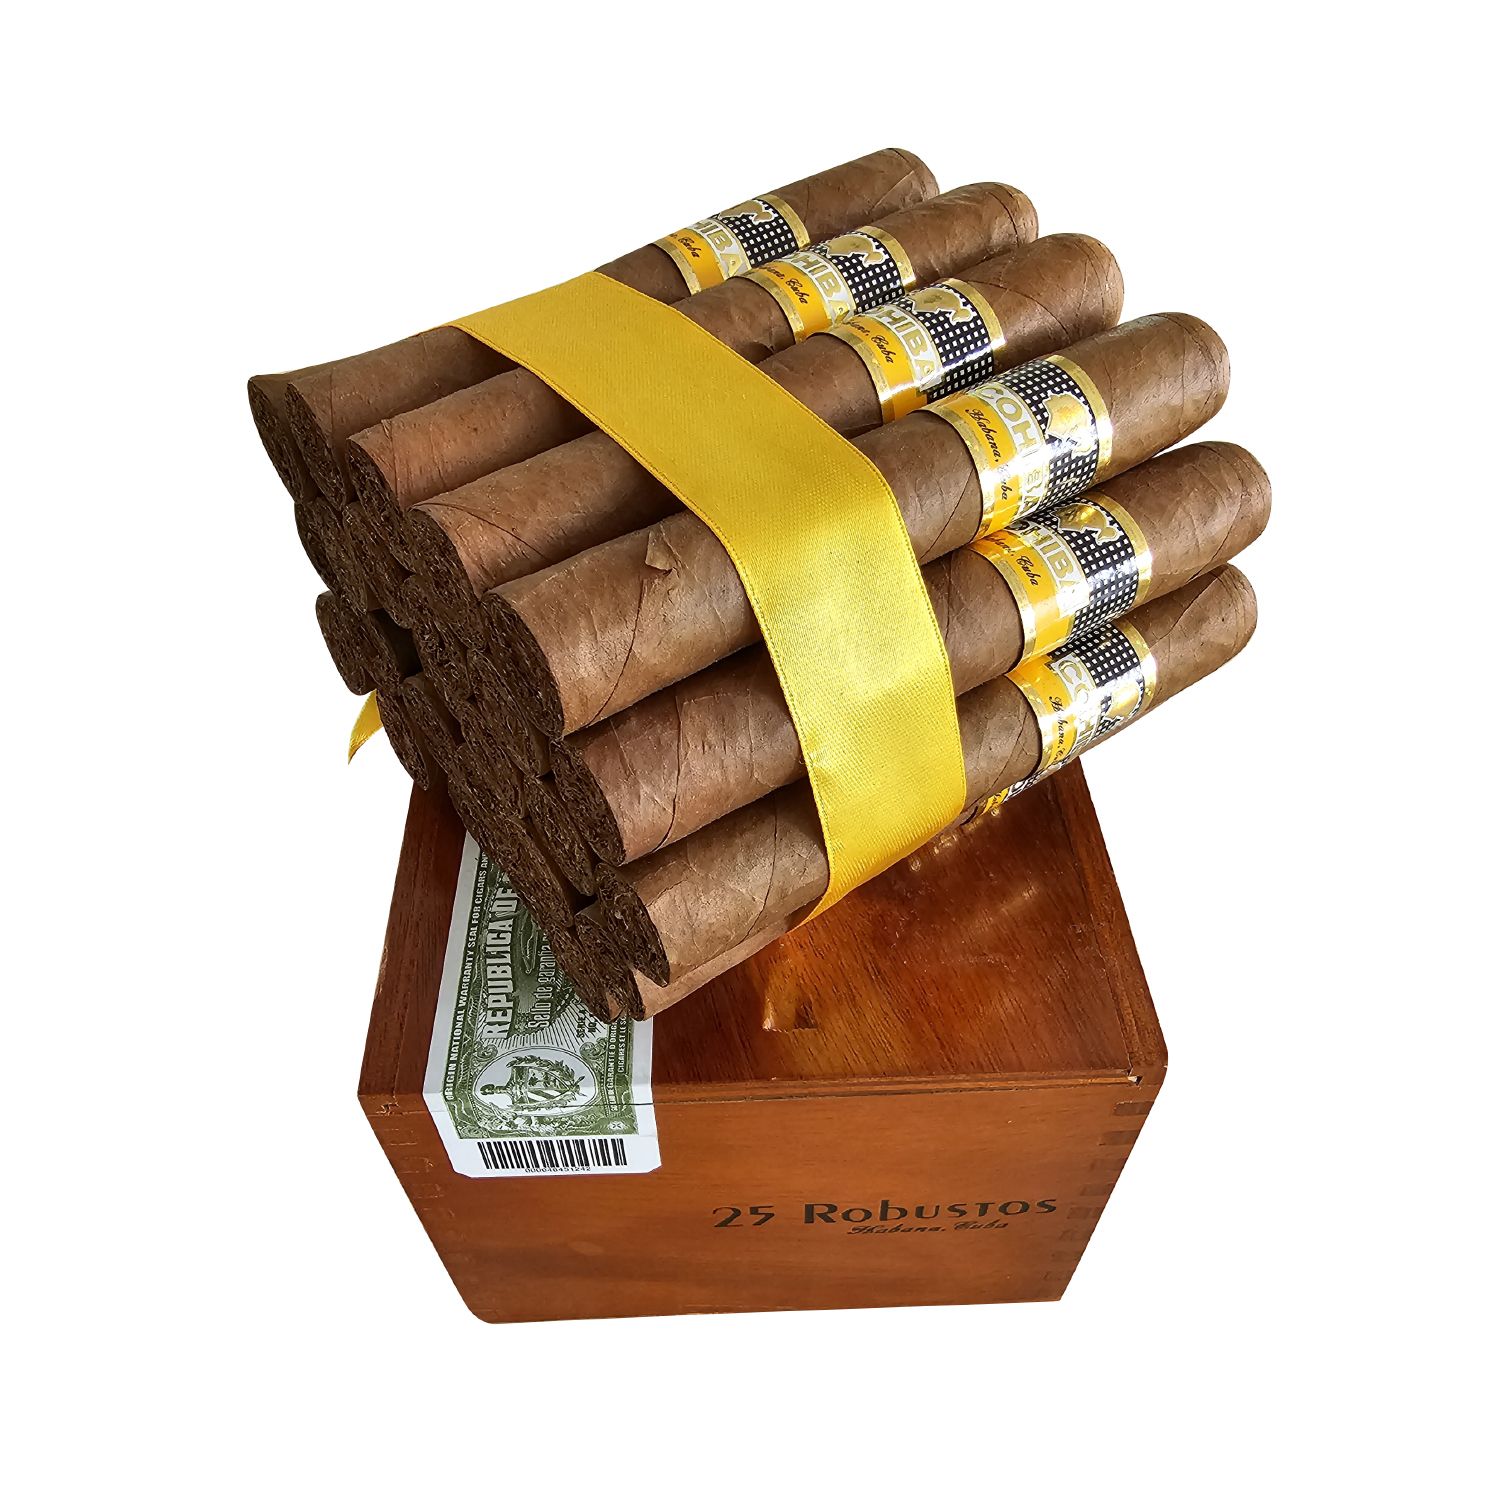 Cigarrenversand24, Cohiba Robustos 1 Stück = einzeln